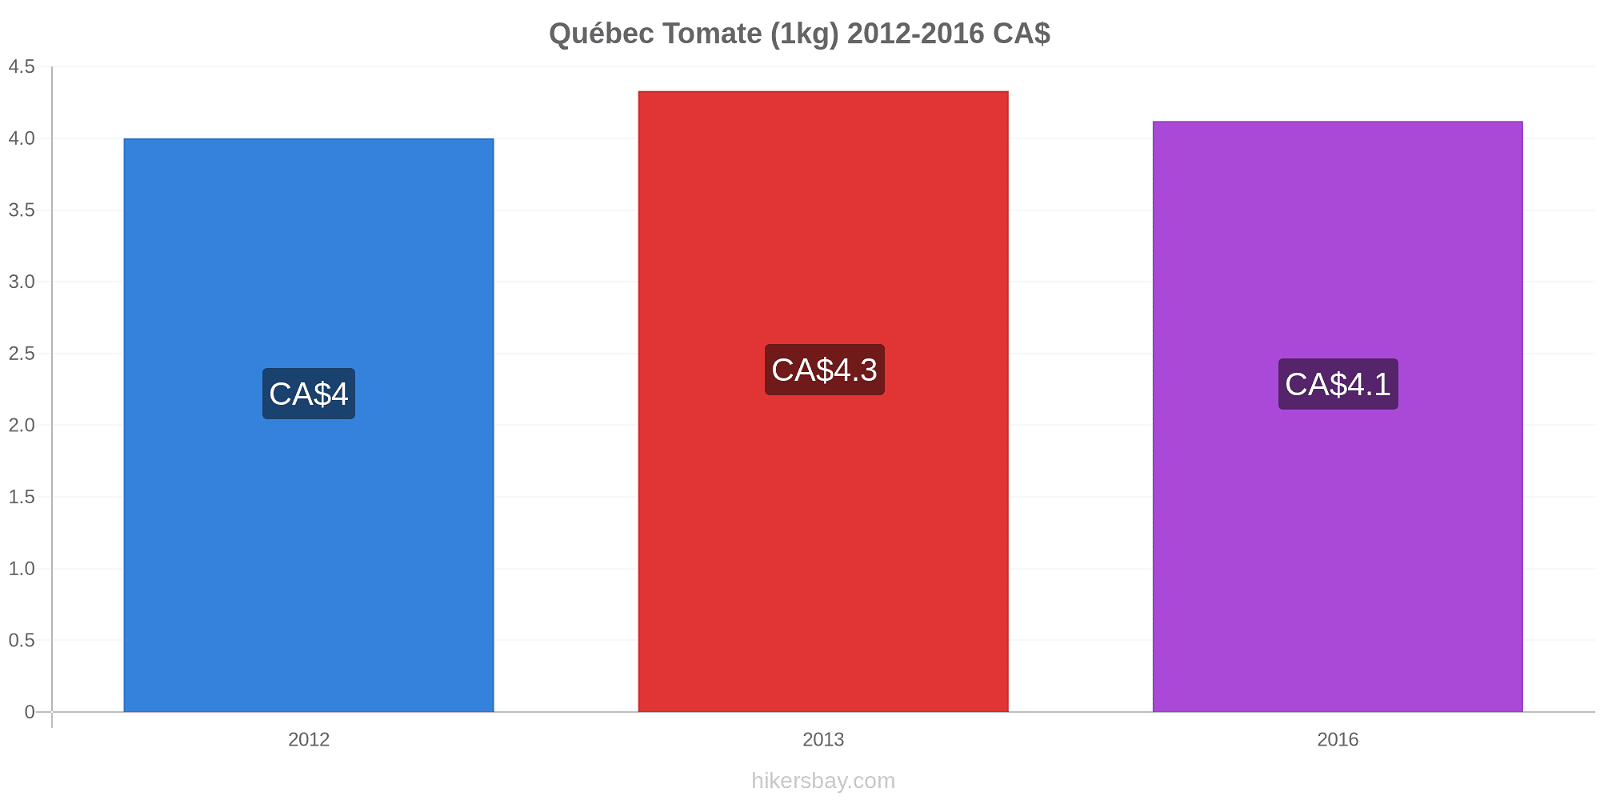 Québec changements de prix Tomate (1kg) hikersbay.com